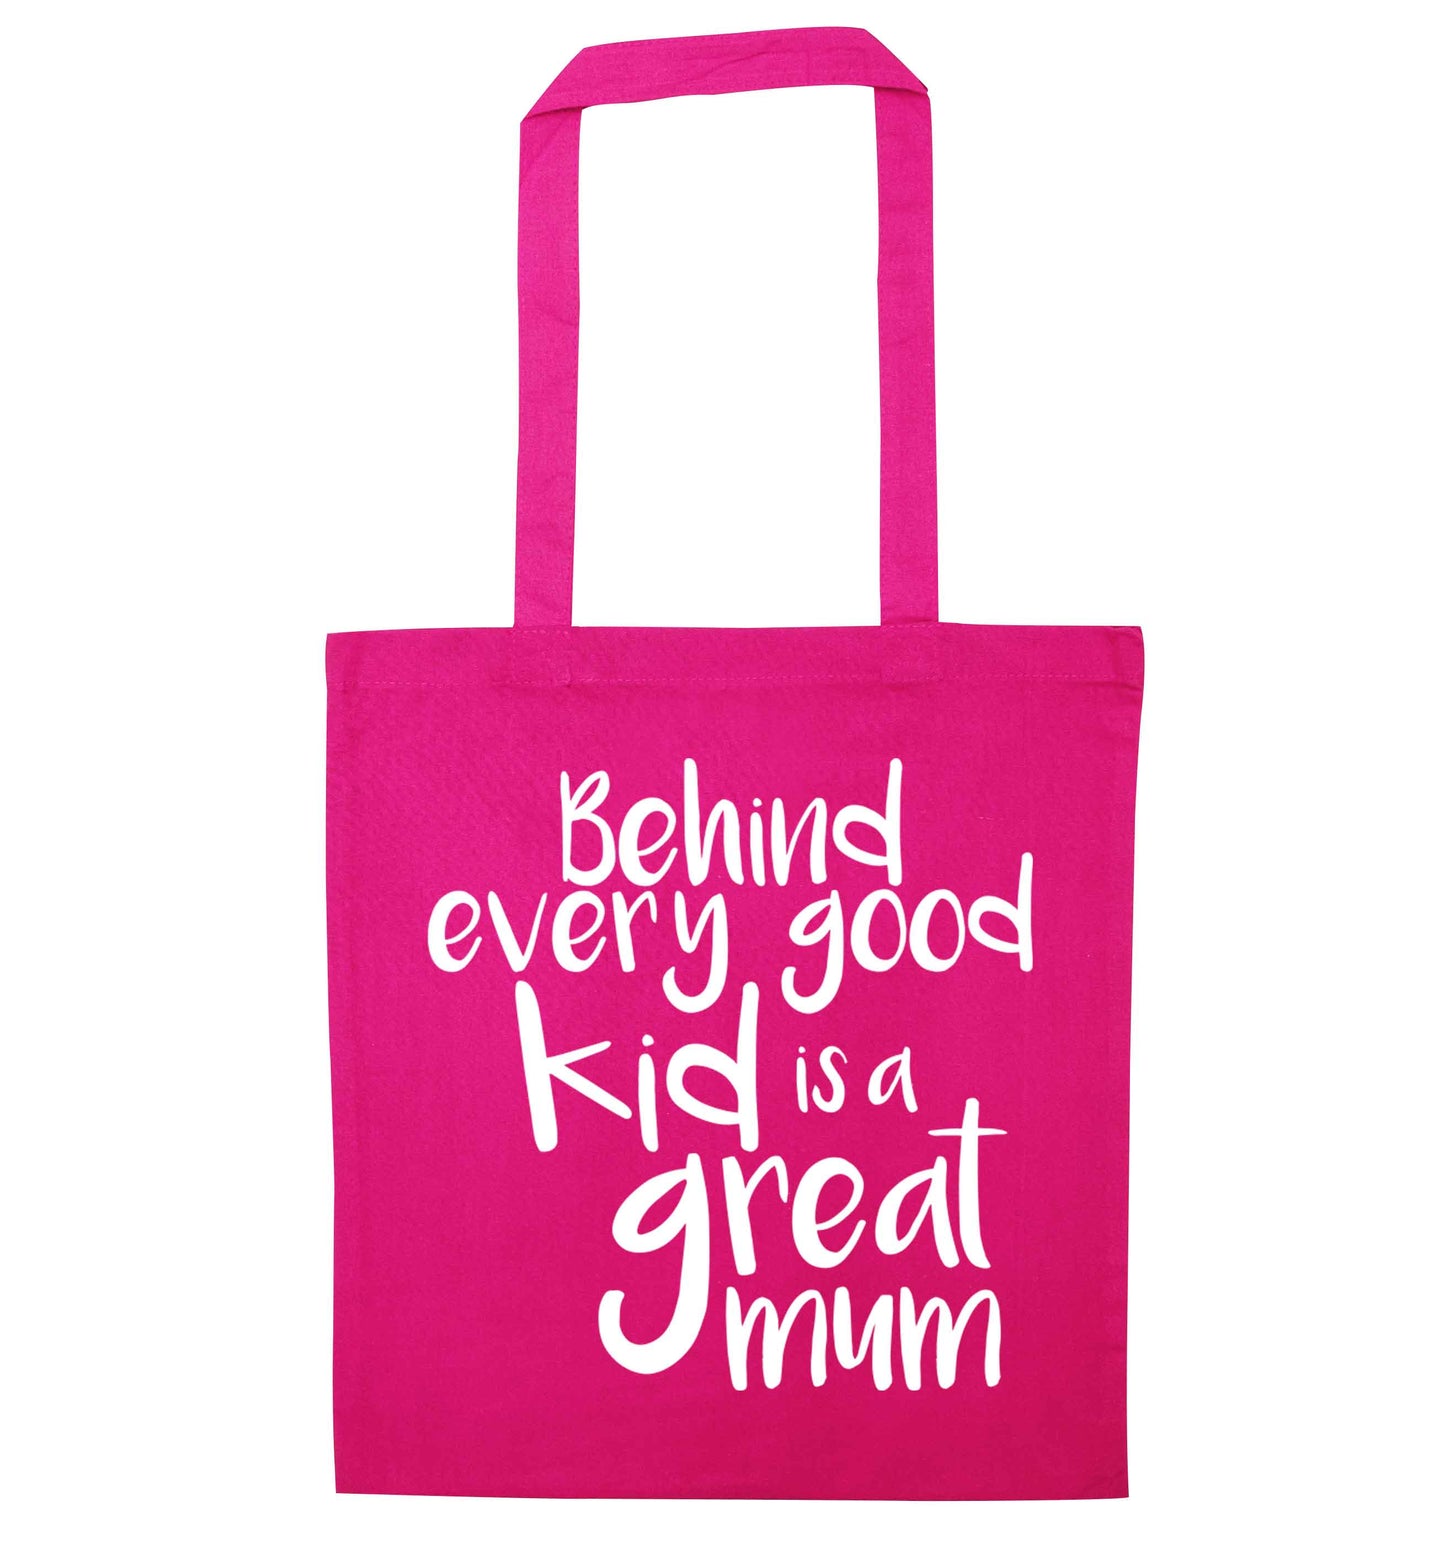 Behind every good kid is a great mum pink tote bag